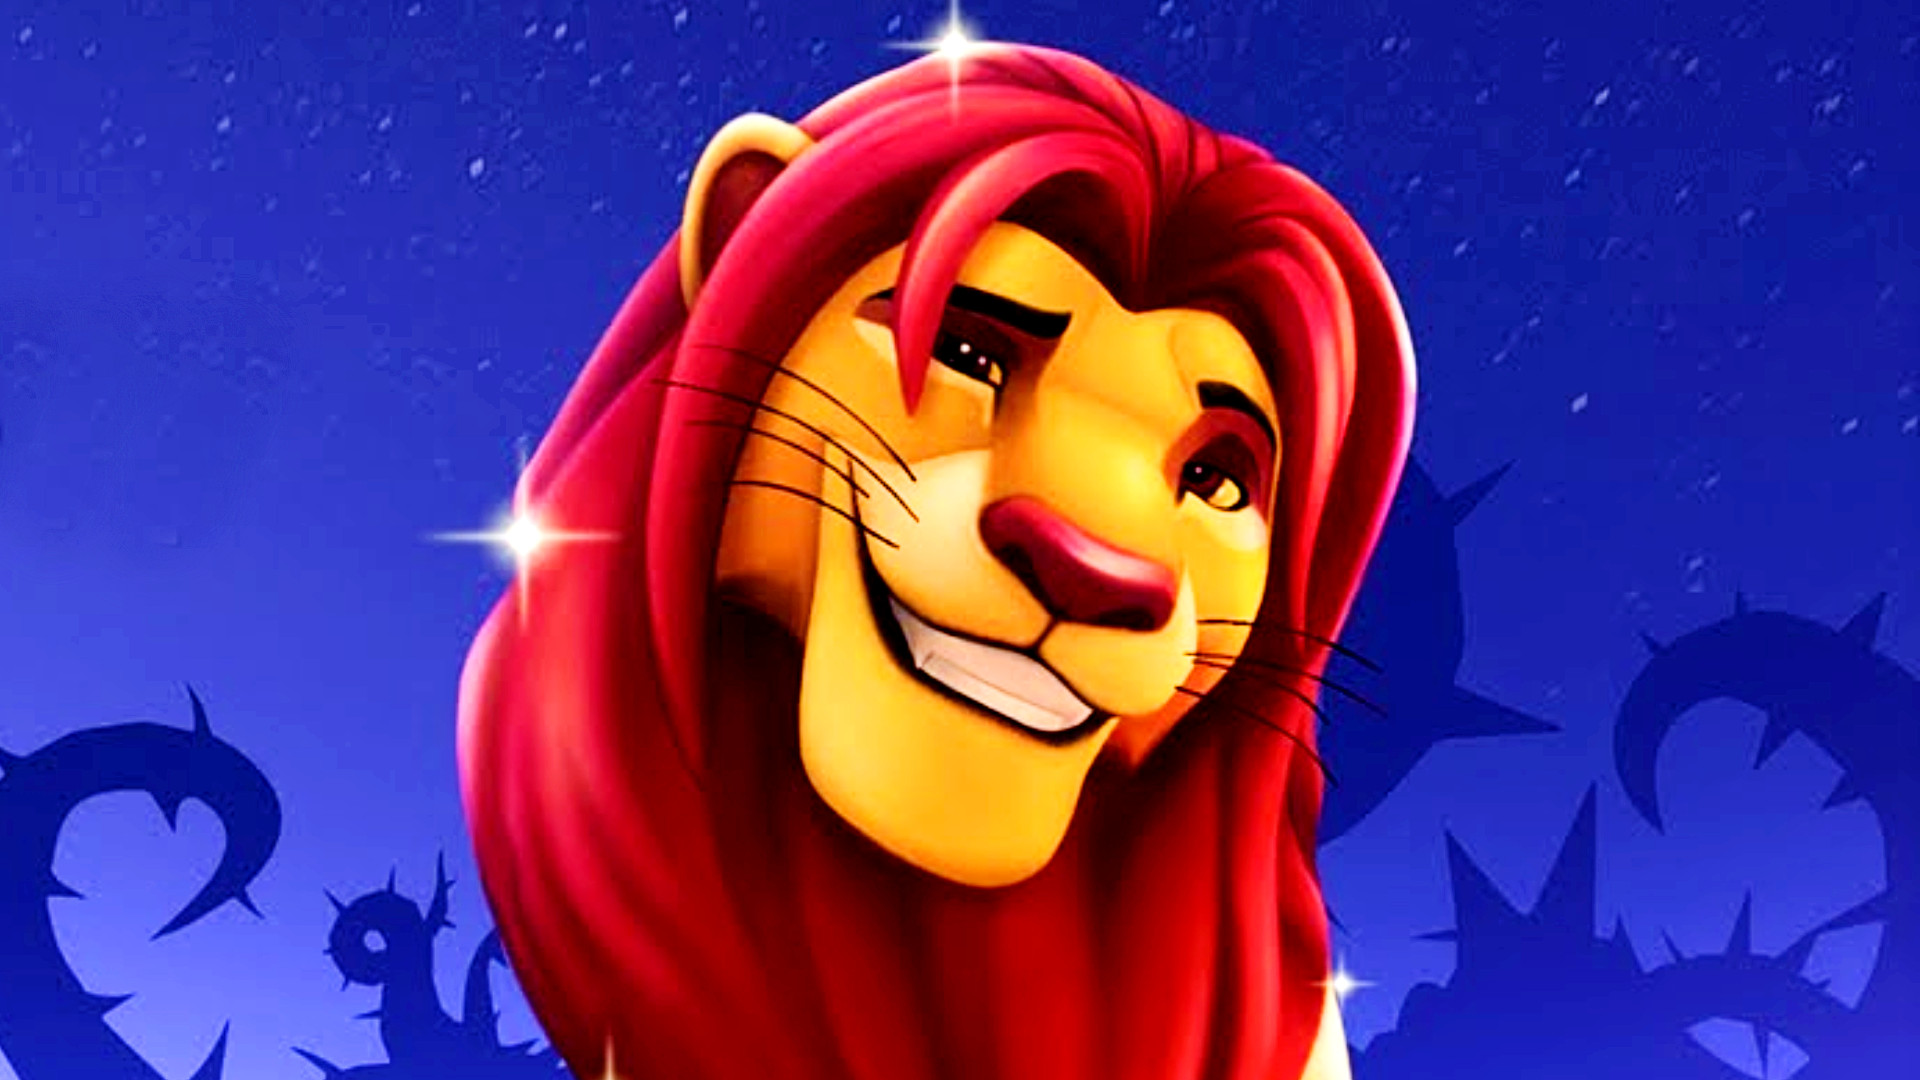 Disney Dreamlight Valley Lion King trailer brings hakuna matata vibes